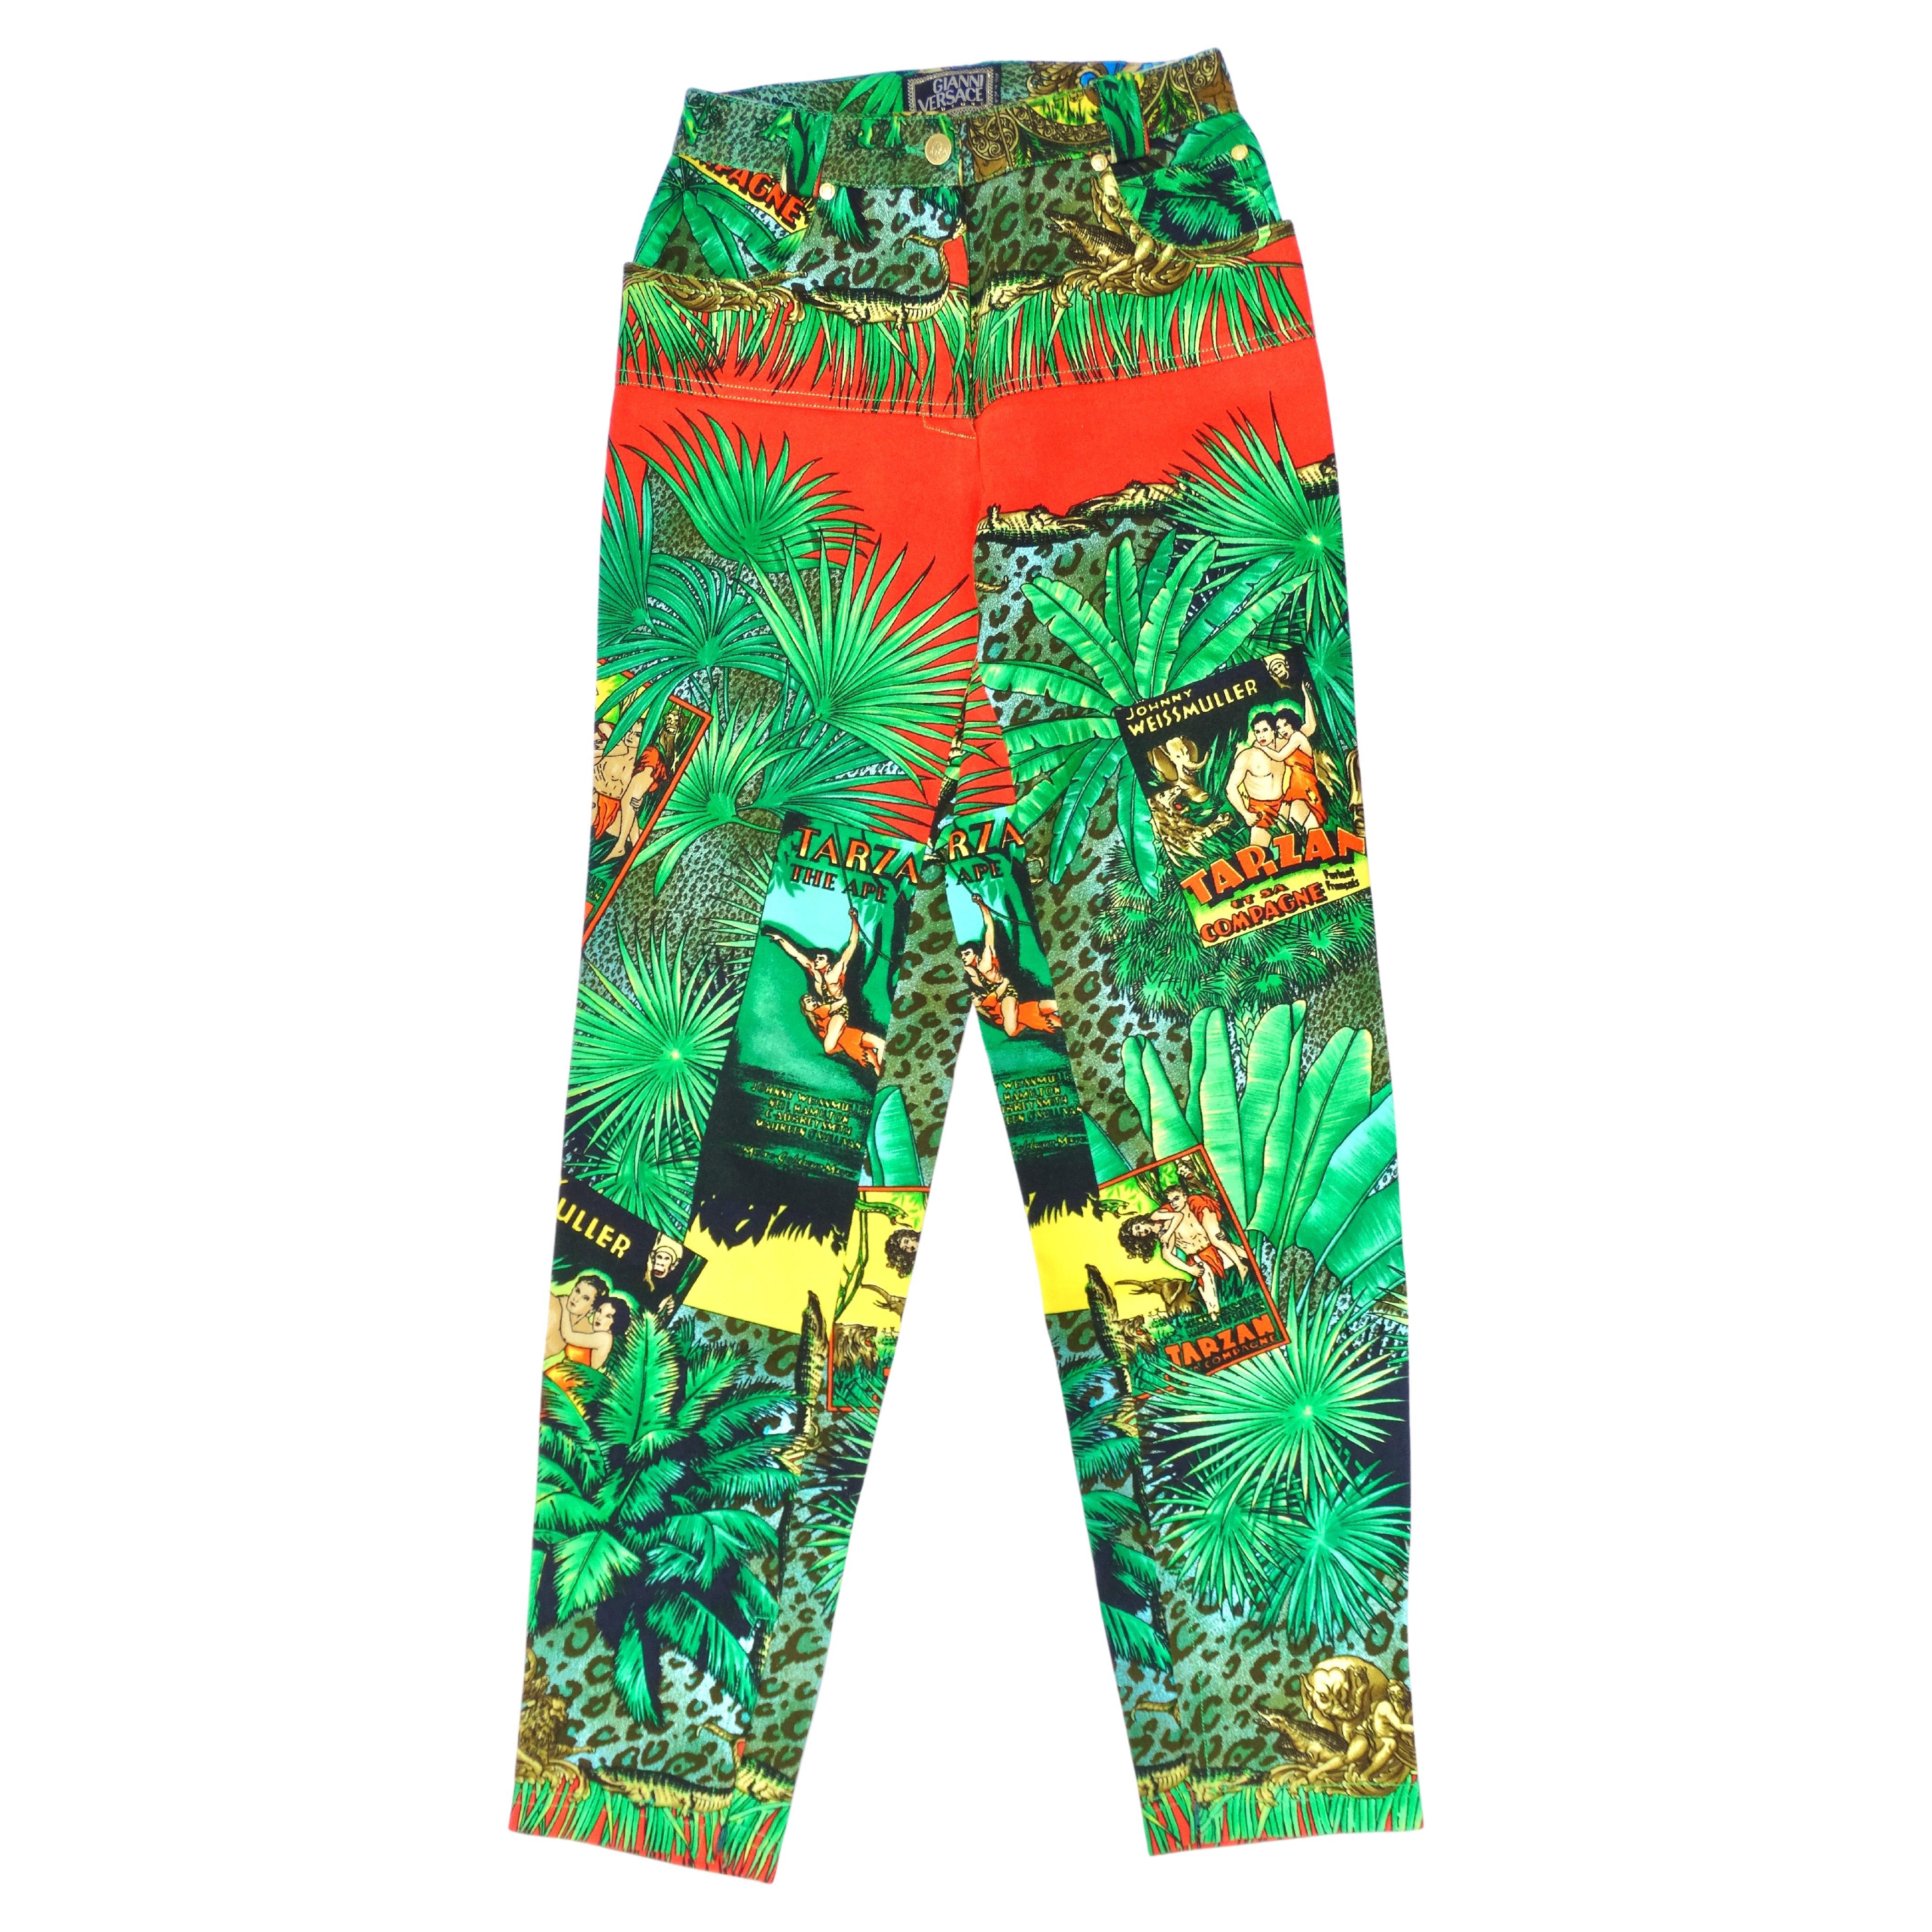  Versace 1990's Tarzan Print Jeans 